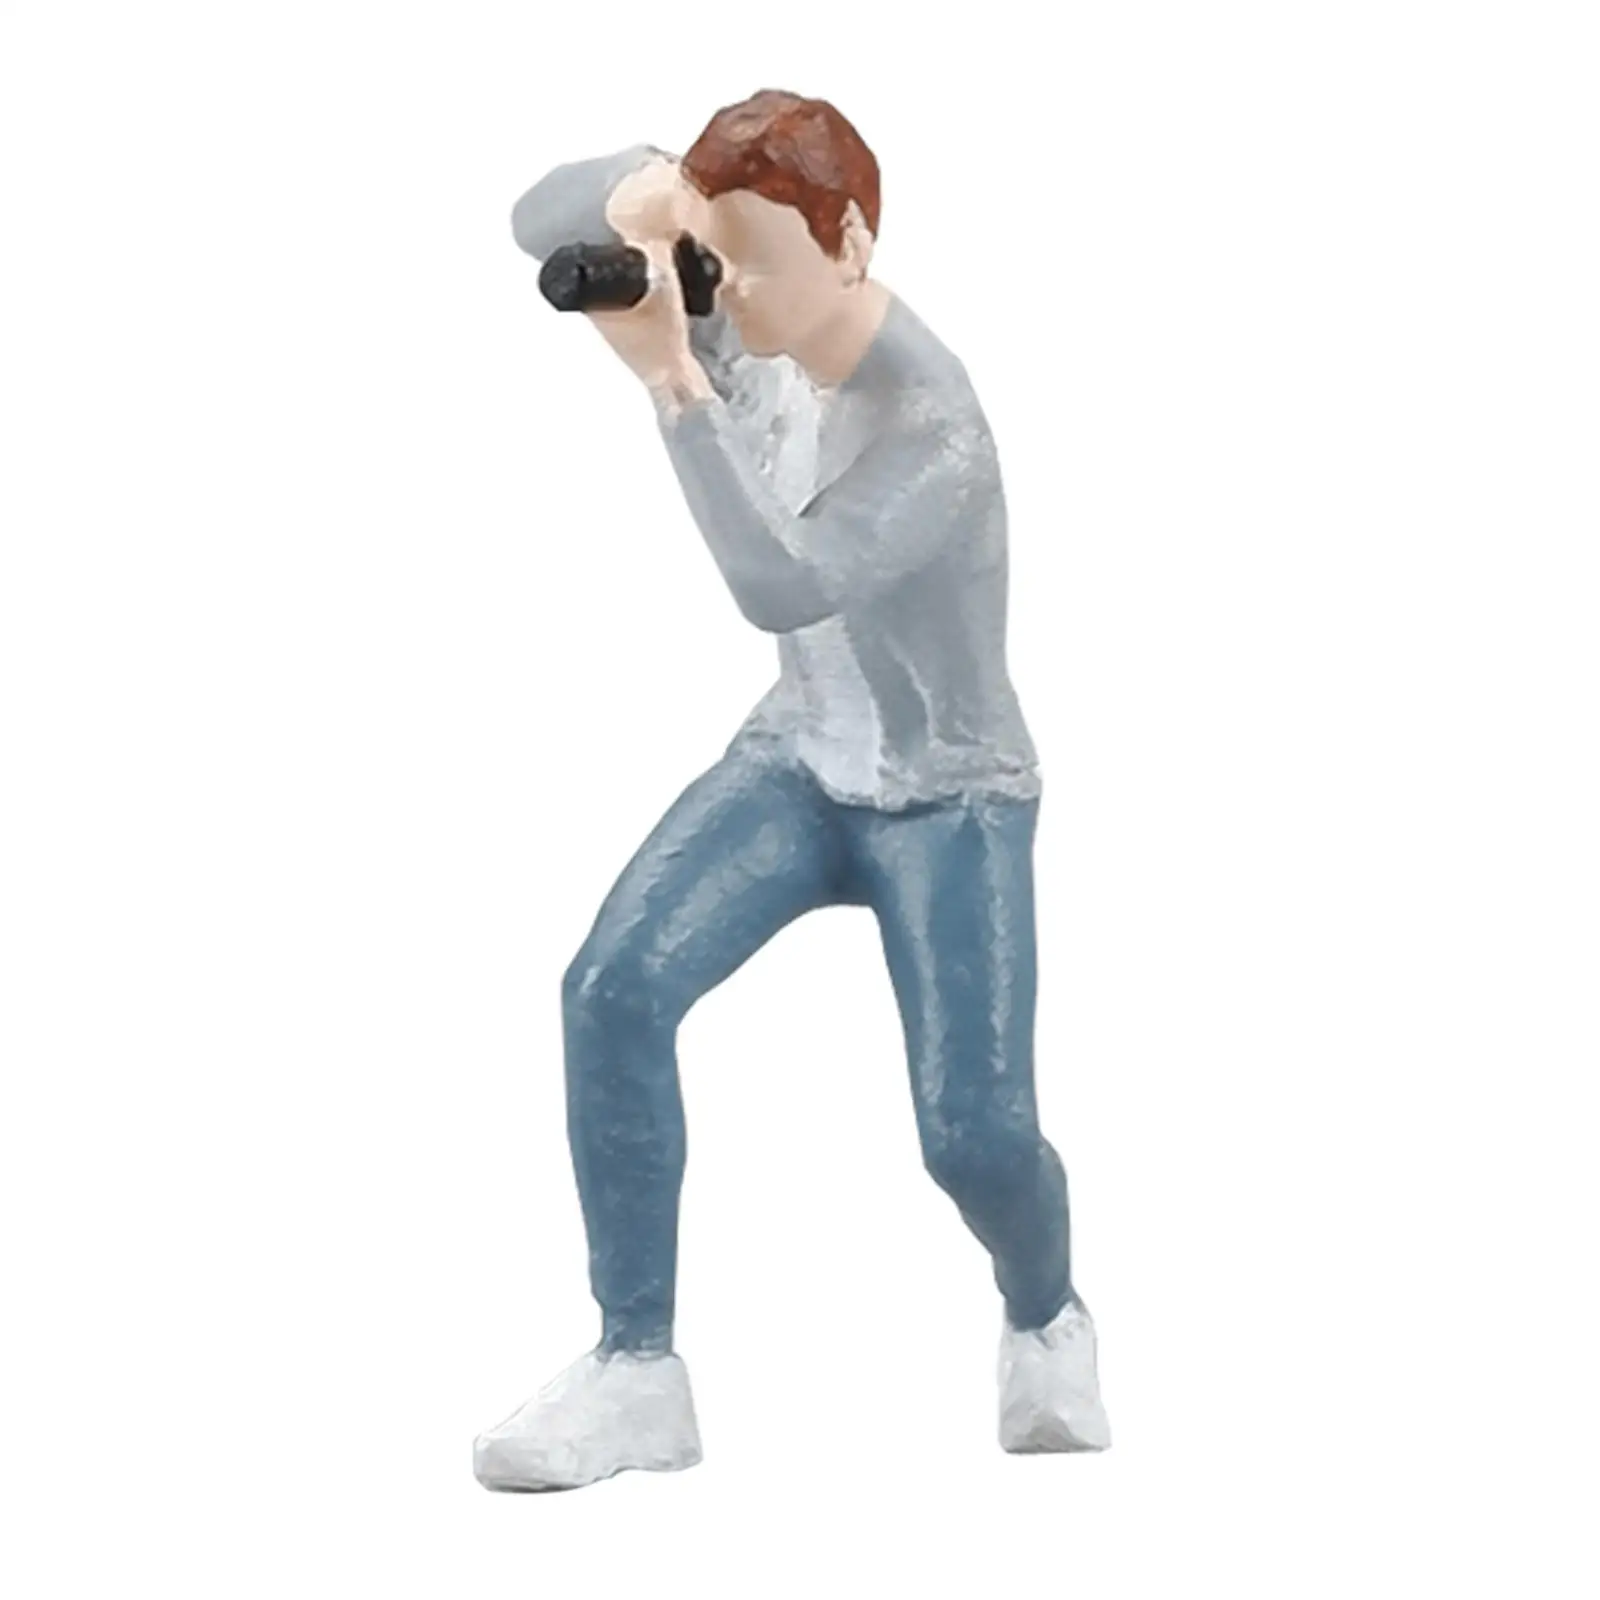 1/64 Scale Miniature Figure Photograph Boy for Model Train Desktop Ornament